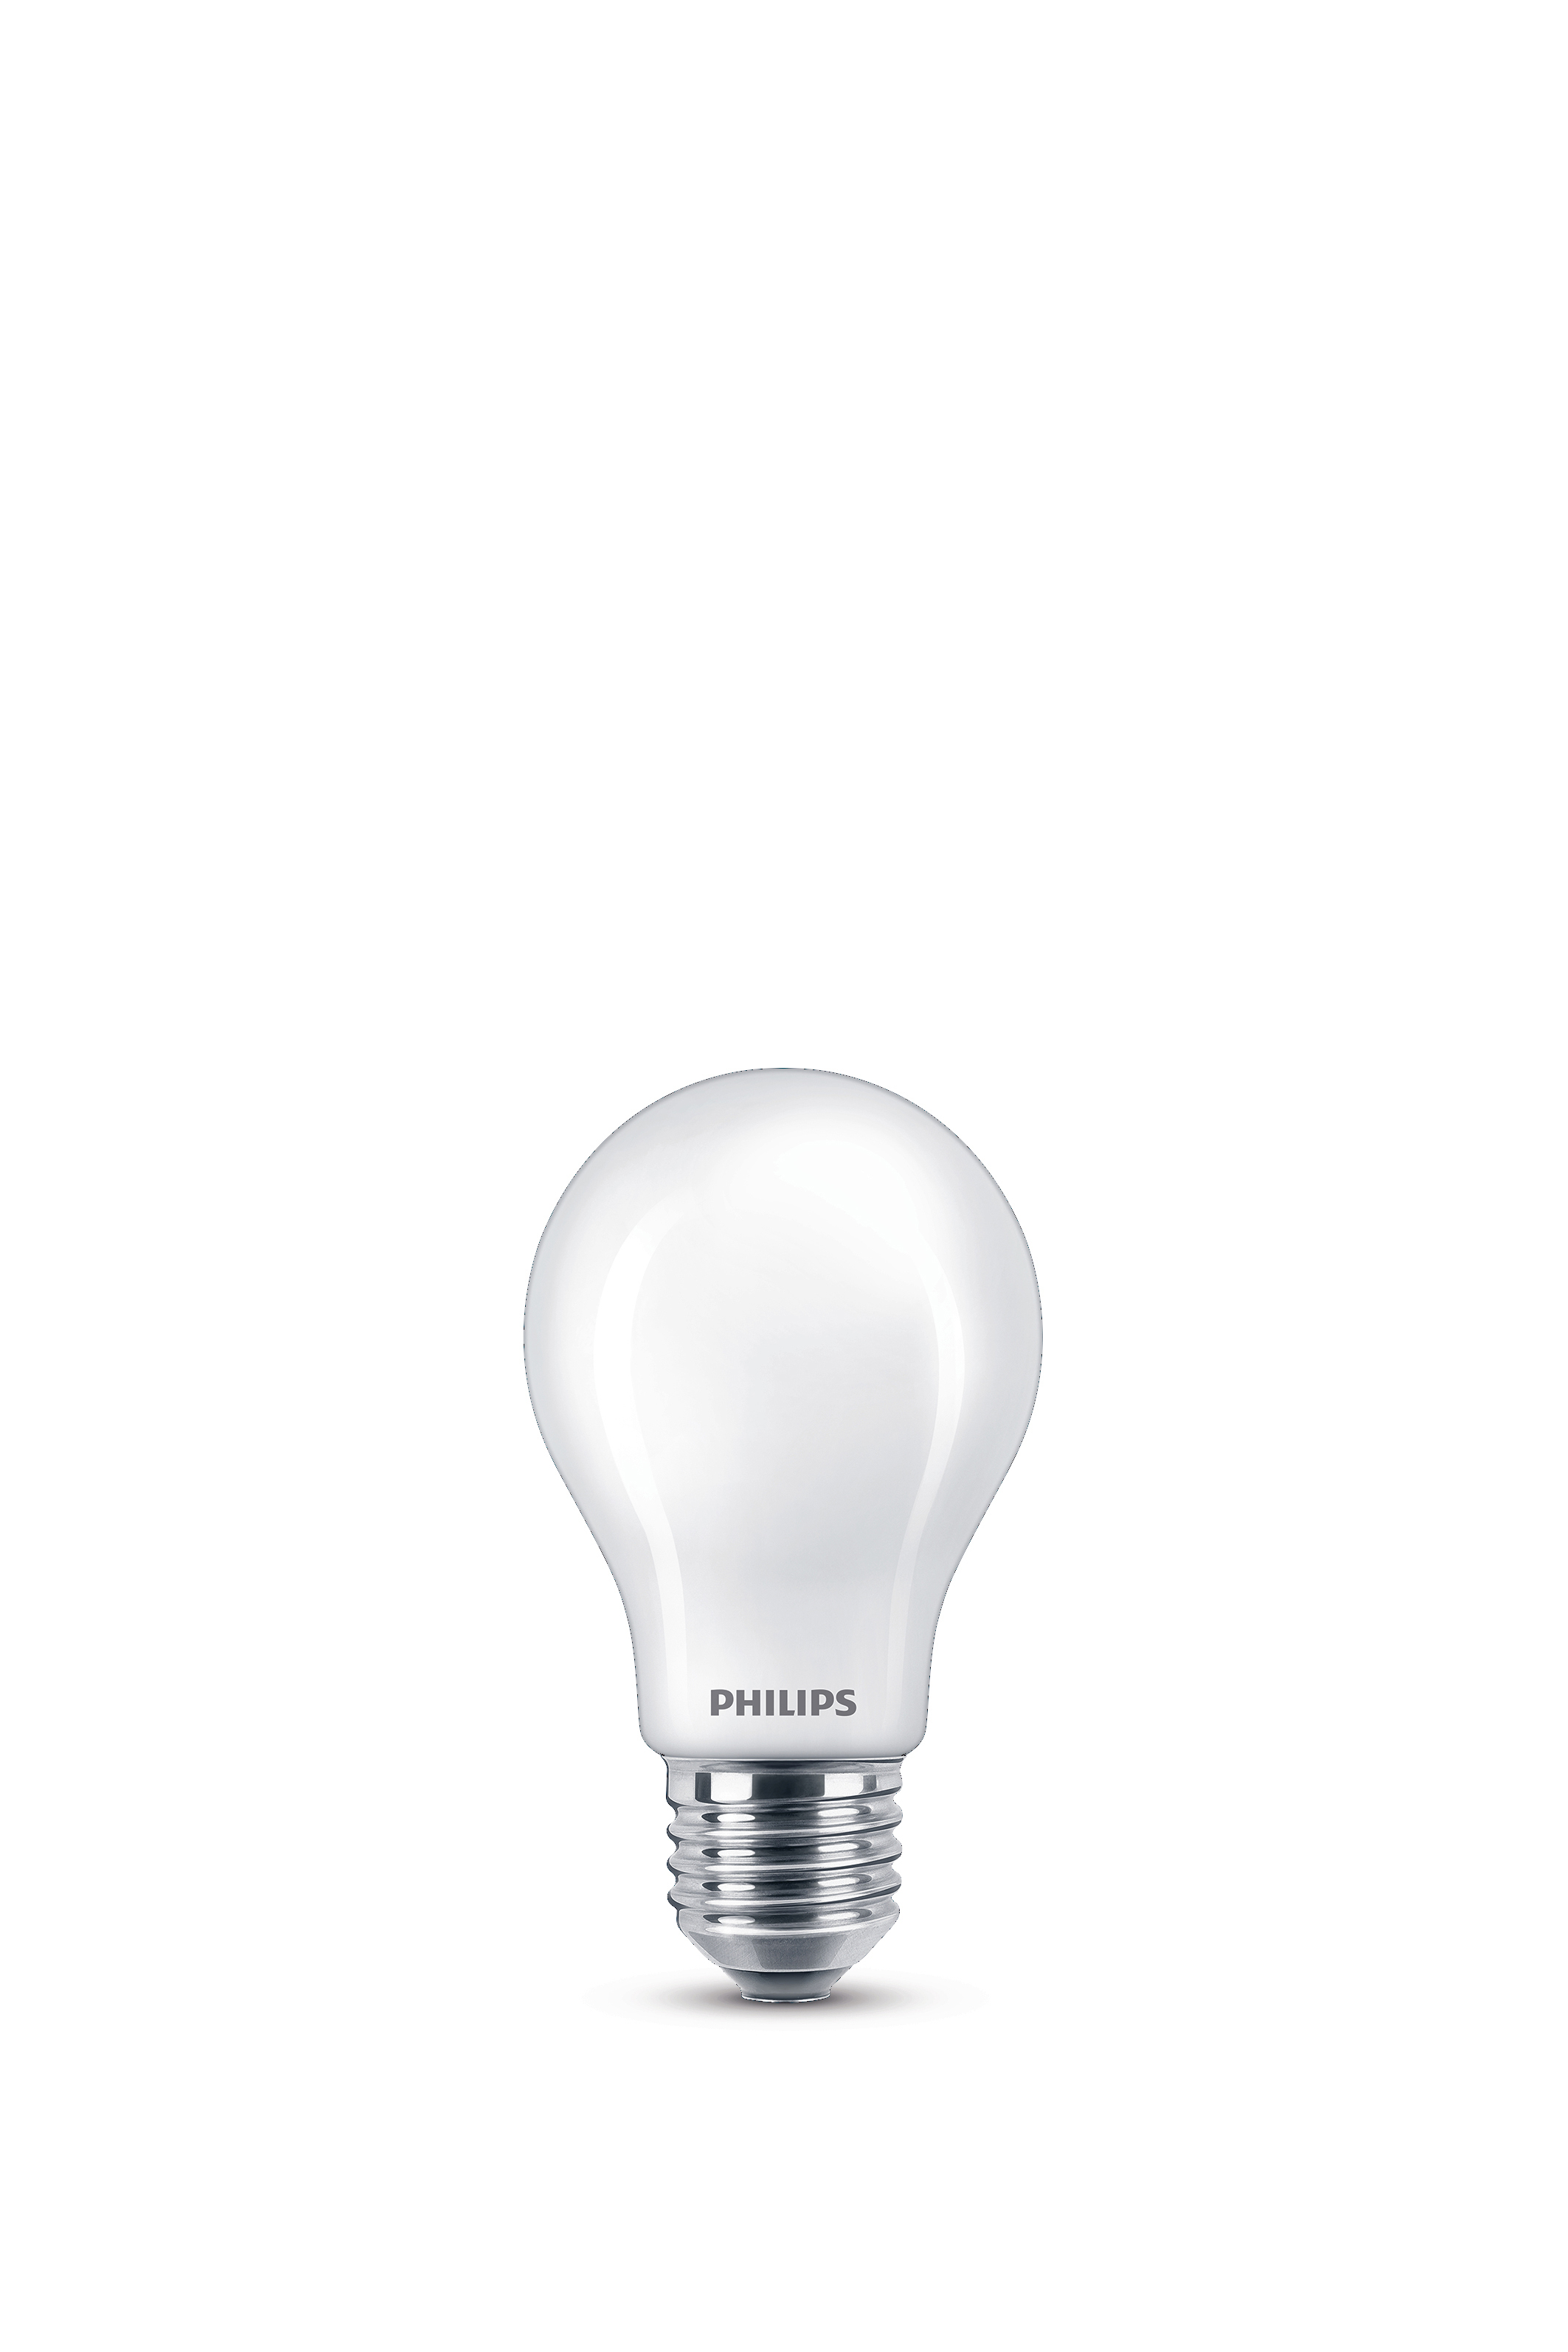 PHILIPS LEDclassic Lampe ersetzt Lampe neutralweiß LED 40W